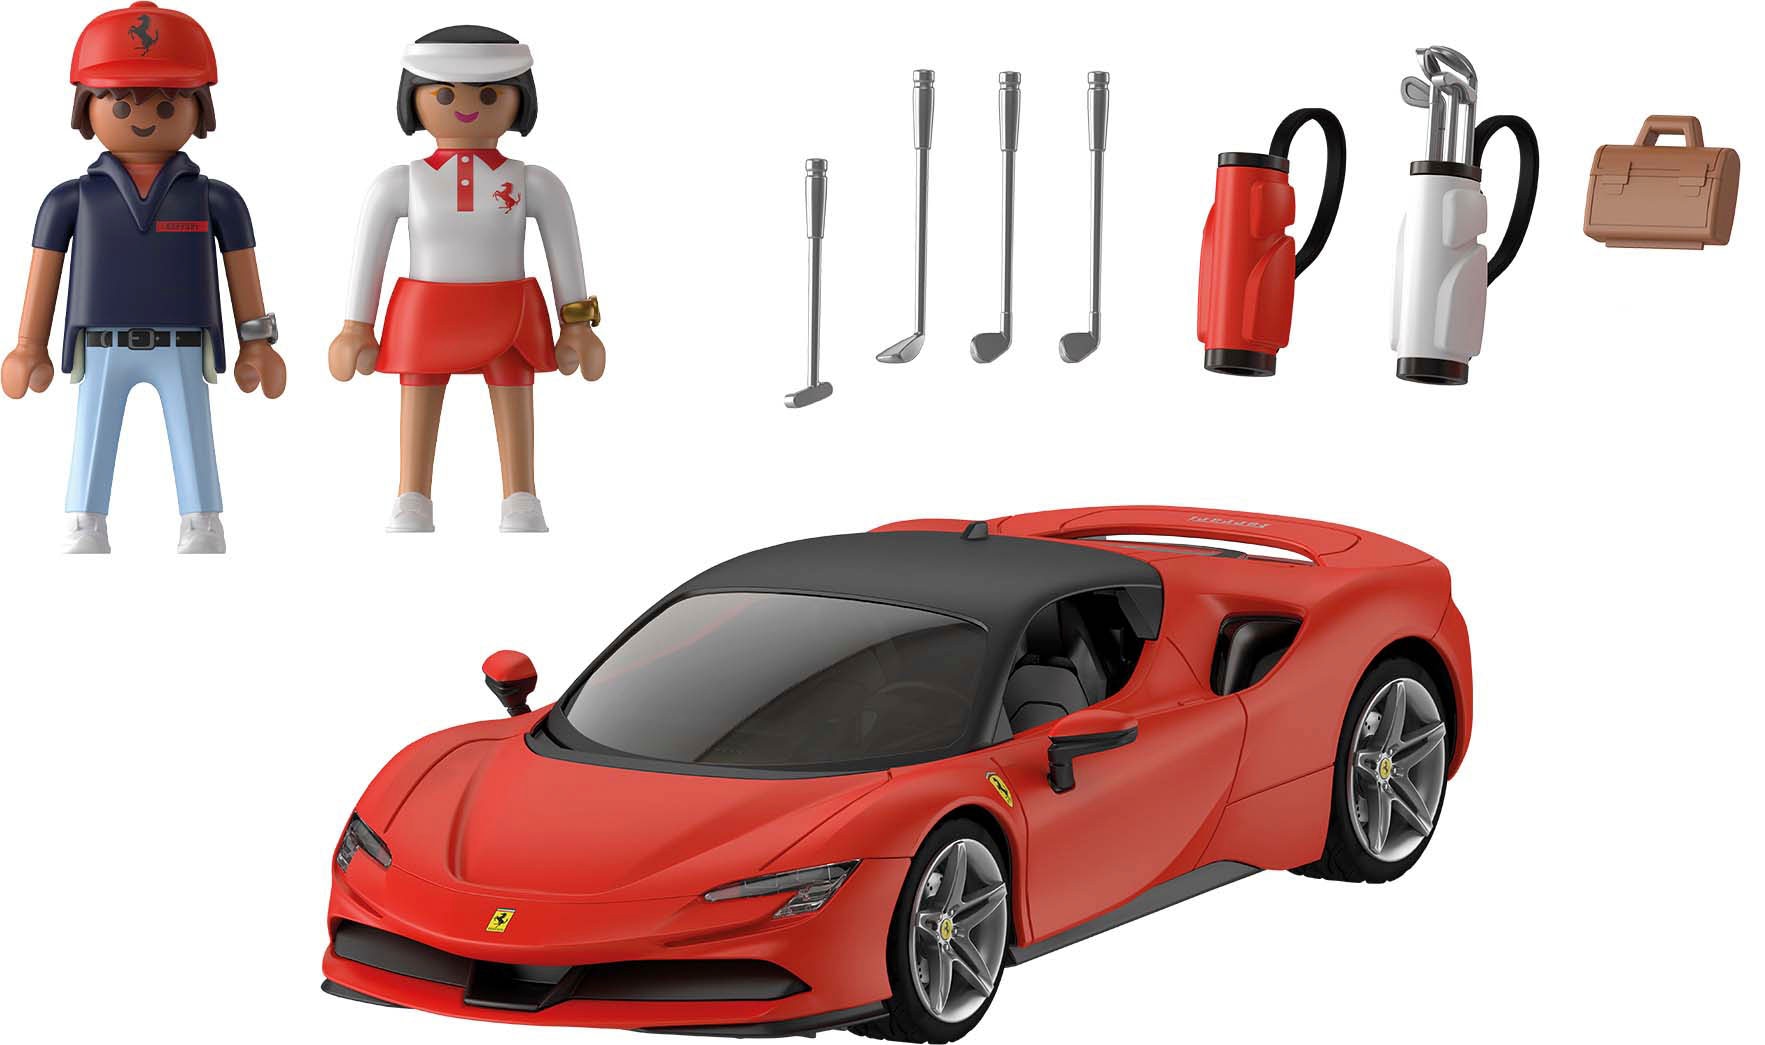 Playmobil® Konstruktions-Spielset »Ferrari SF90 Stradale (71020)«, (43 St.), mit Lichteffekten; Made in Germany